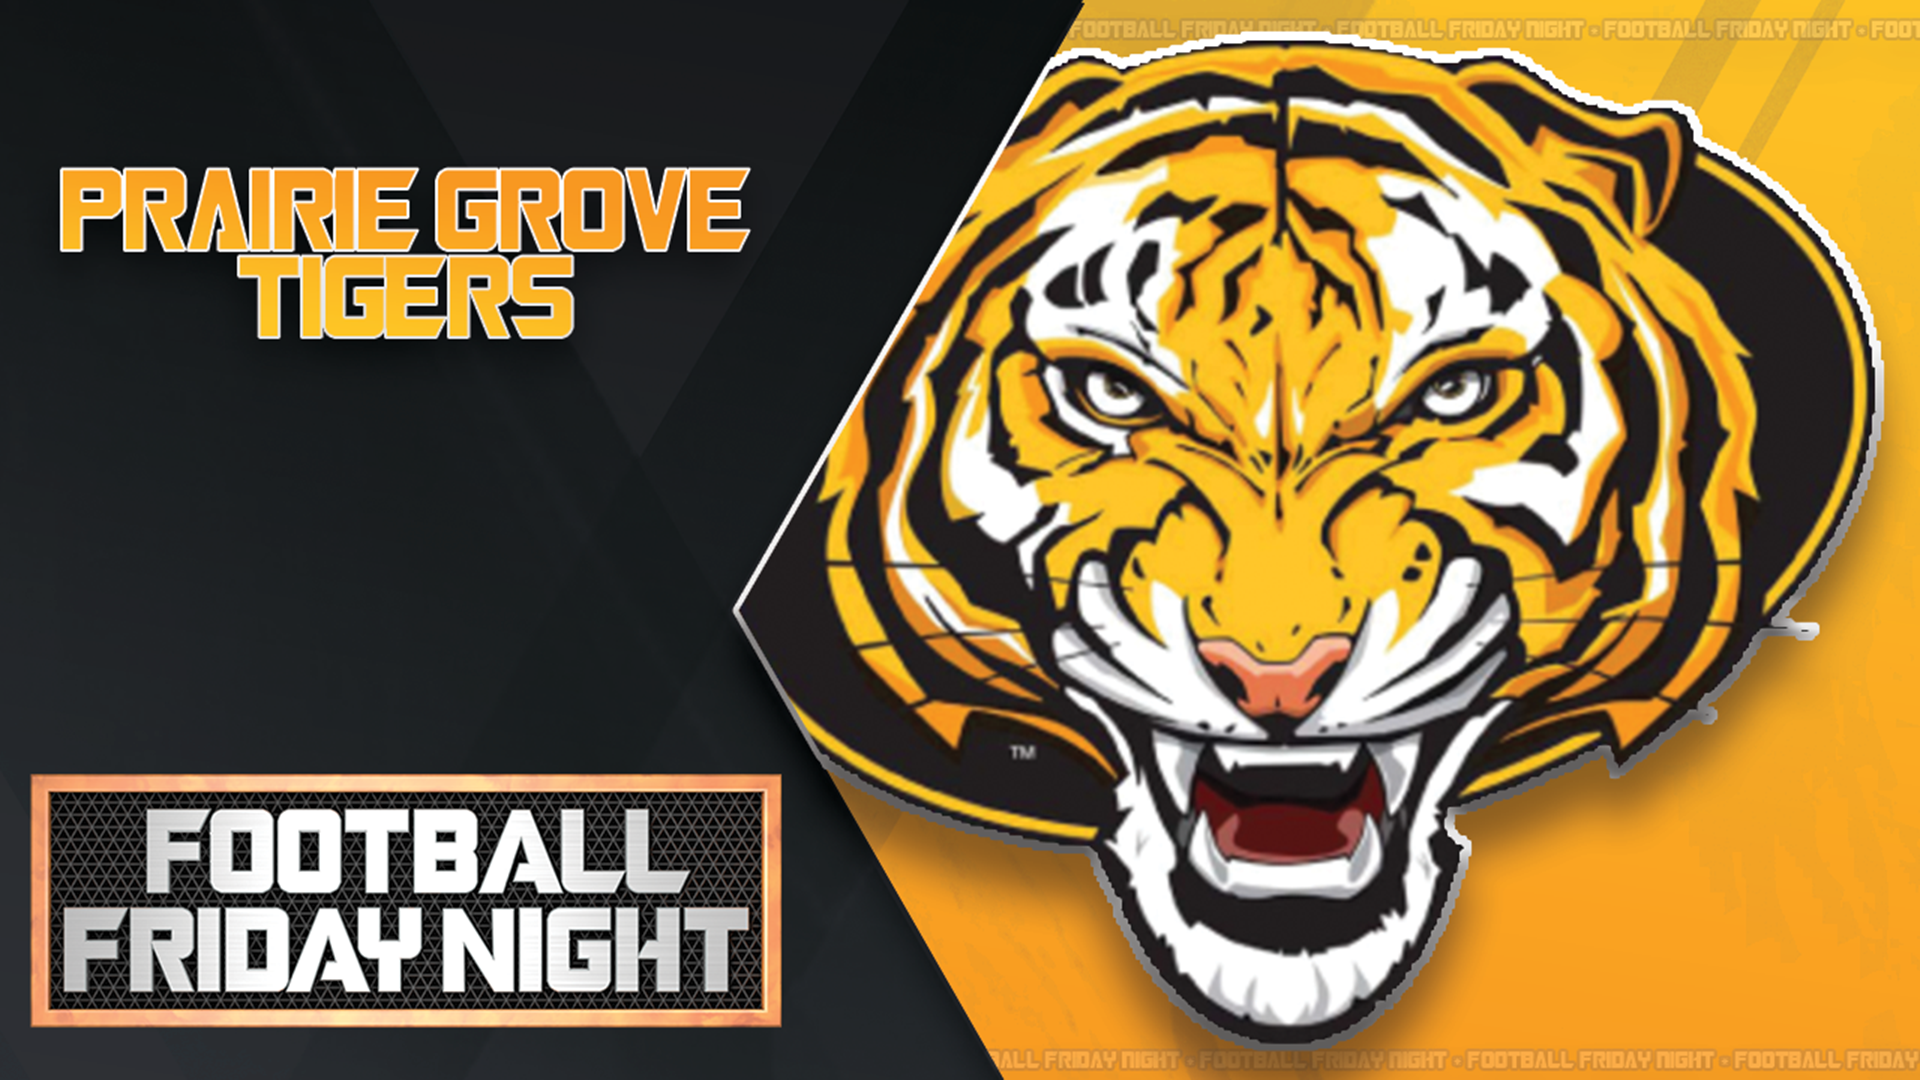 5NEWS Football Friday Night previews Prairie Grove Tigers 5newsonline